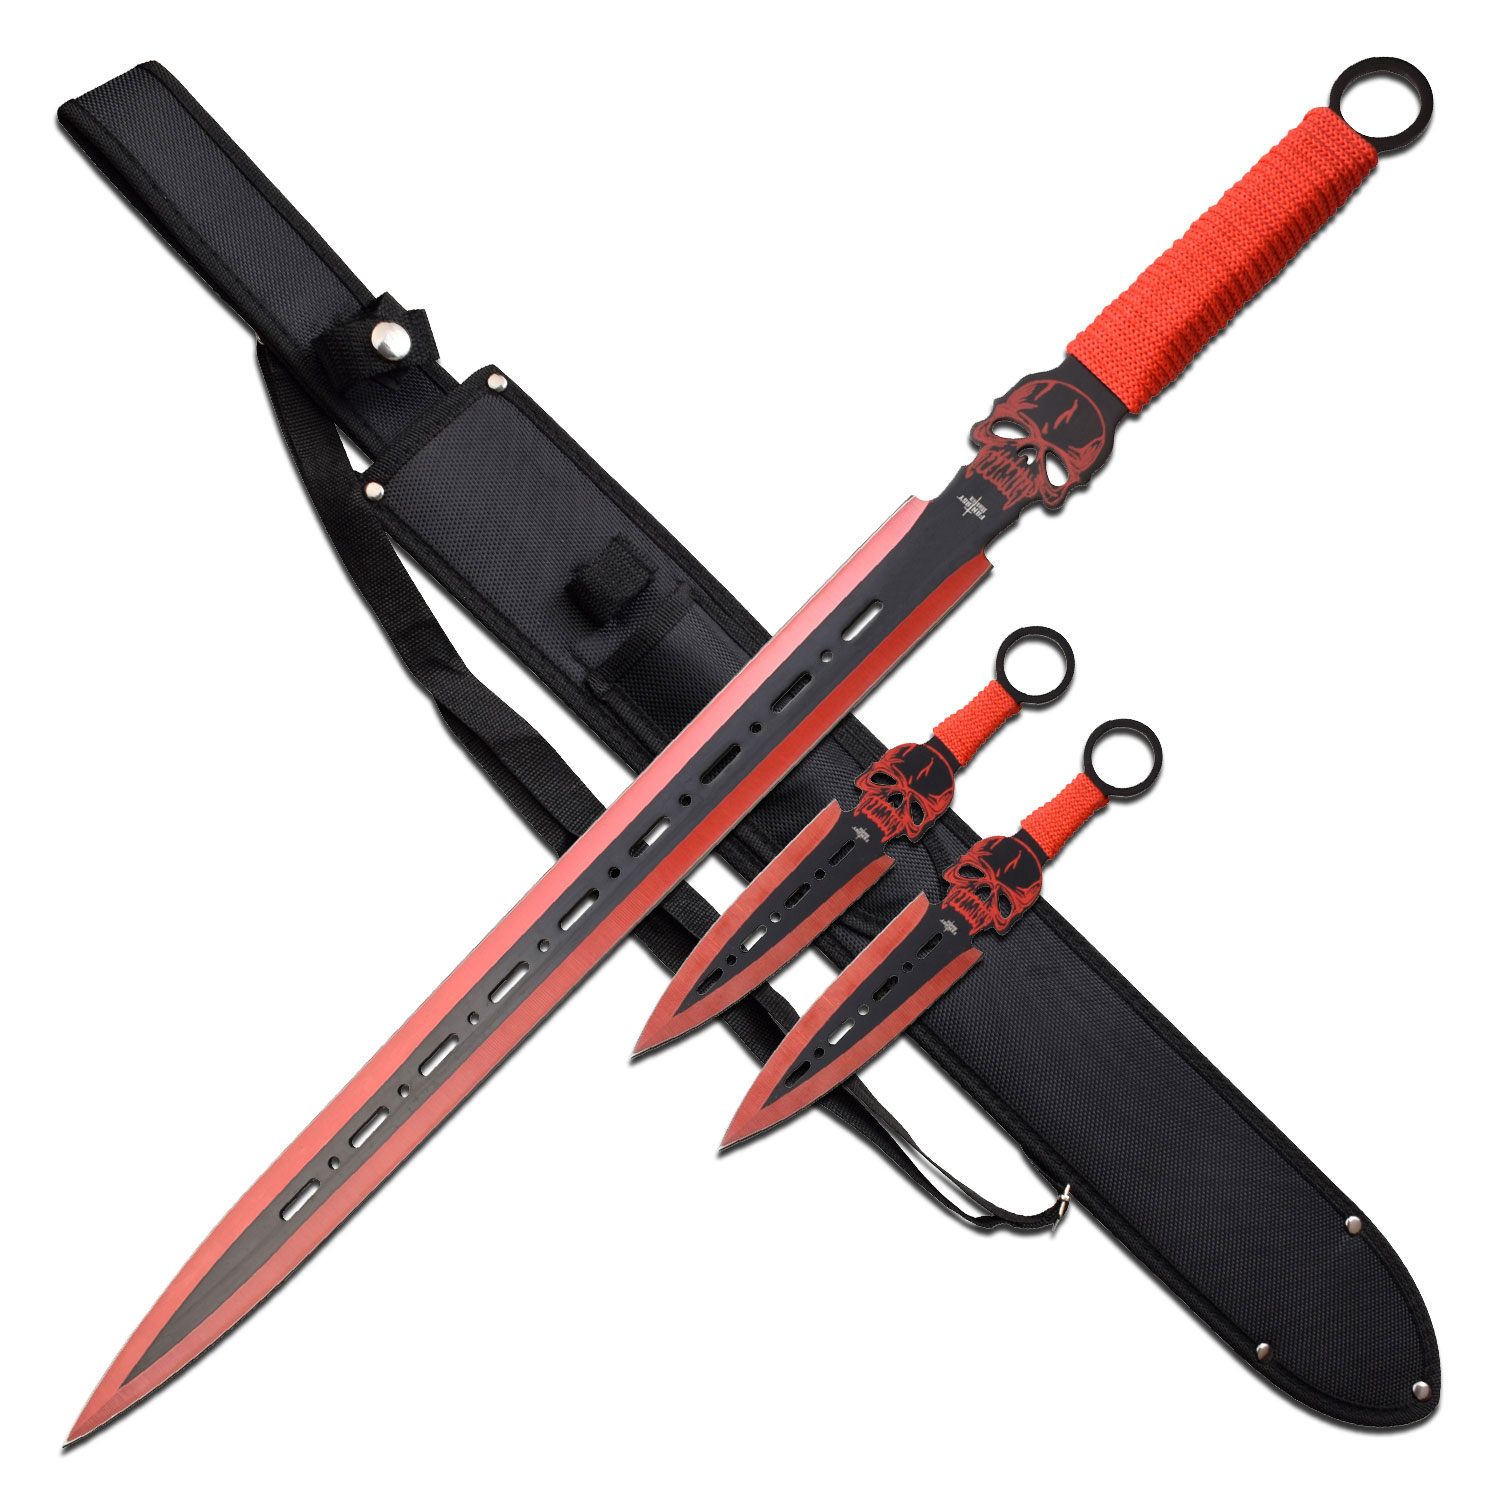 Fantasy Sword Skull Black Red 17.25In Blade Inc 2 Throwing Knives + Sheath